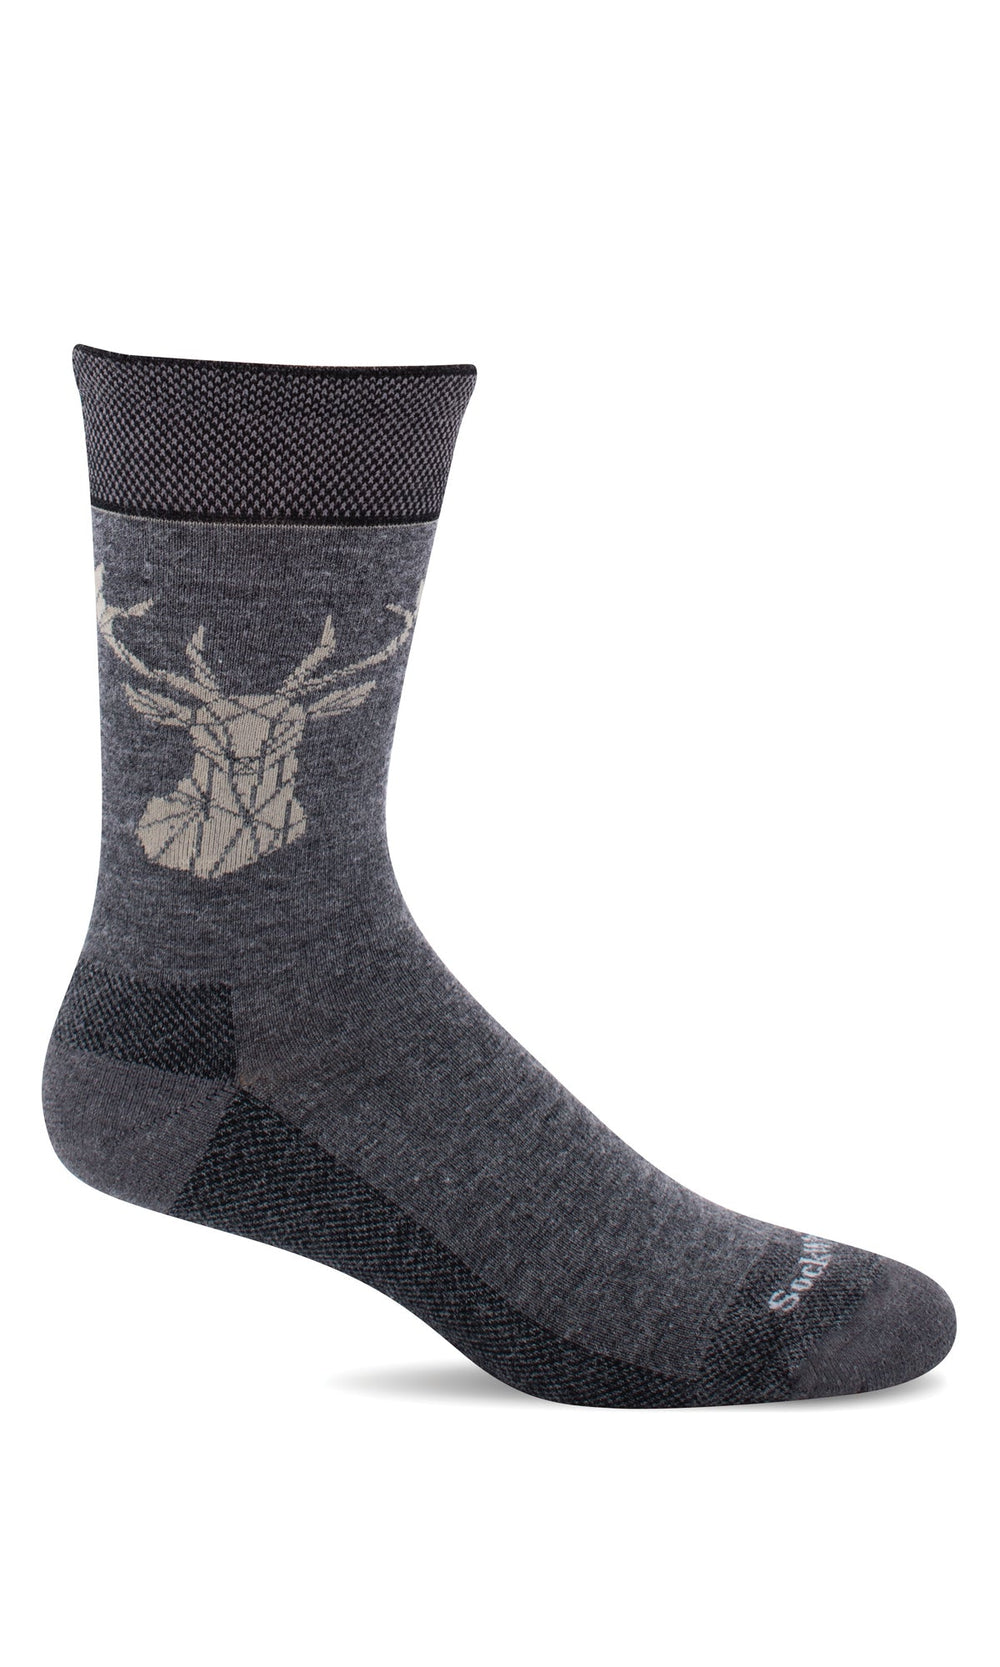 Sockwell Tender Foot Essential Comfort Socks (Men's) - Charcoal